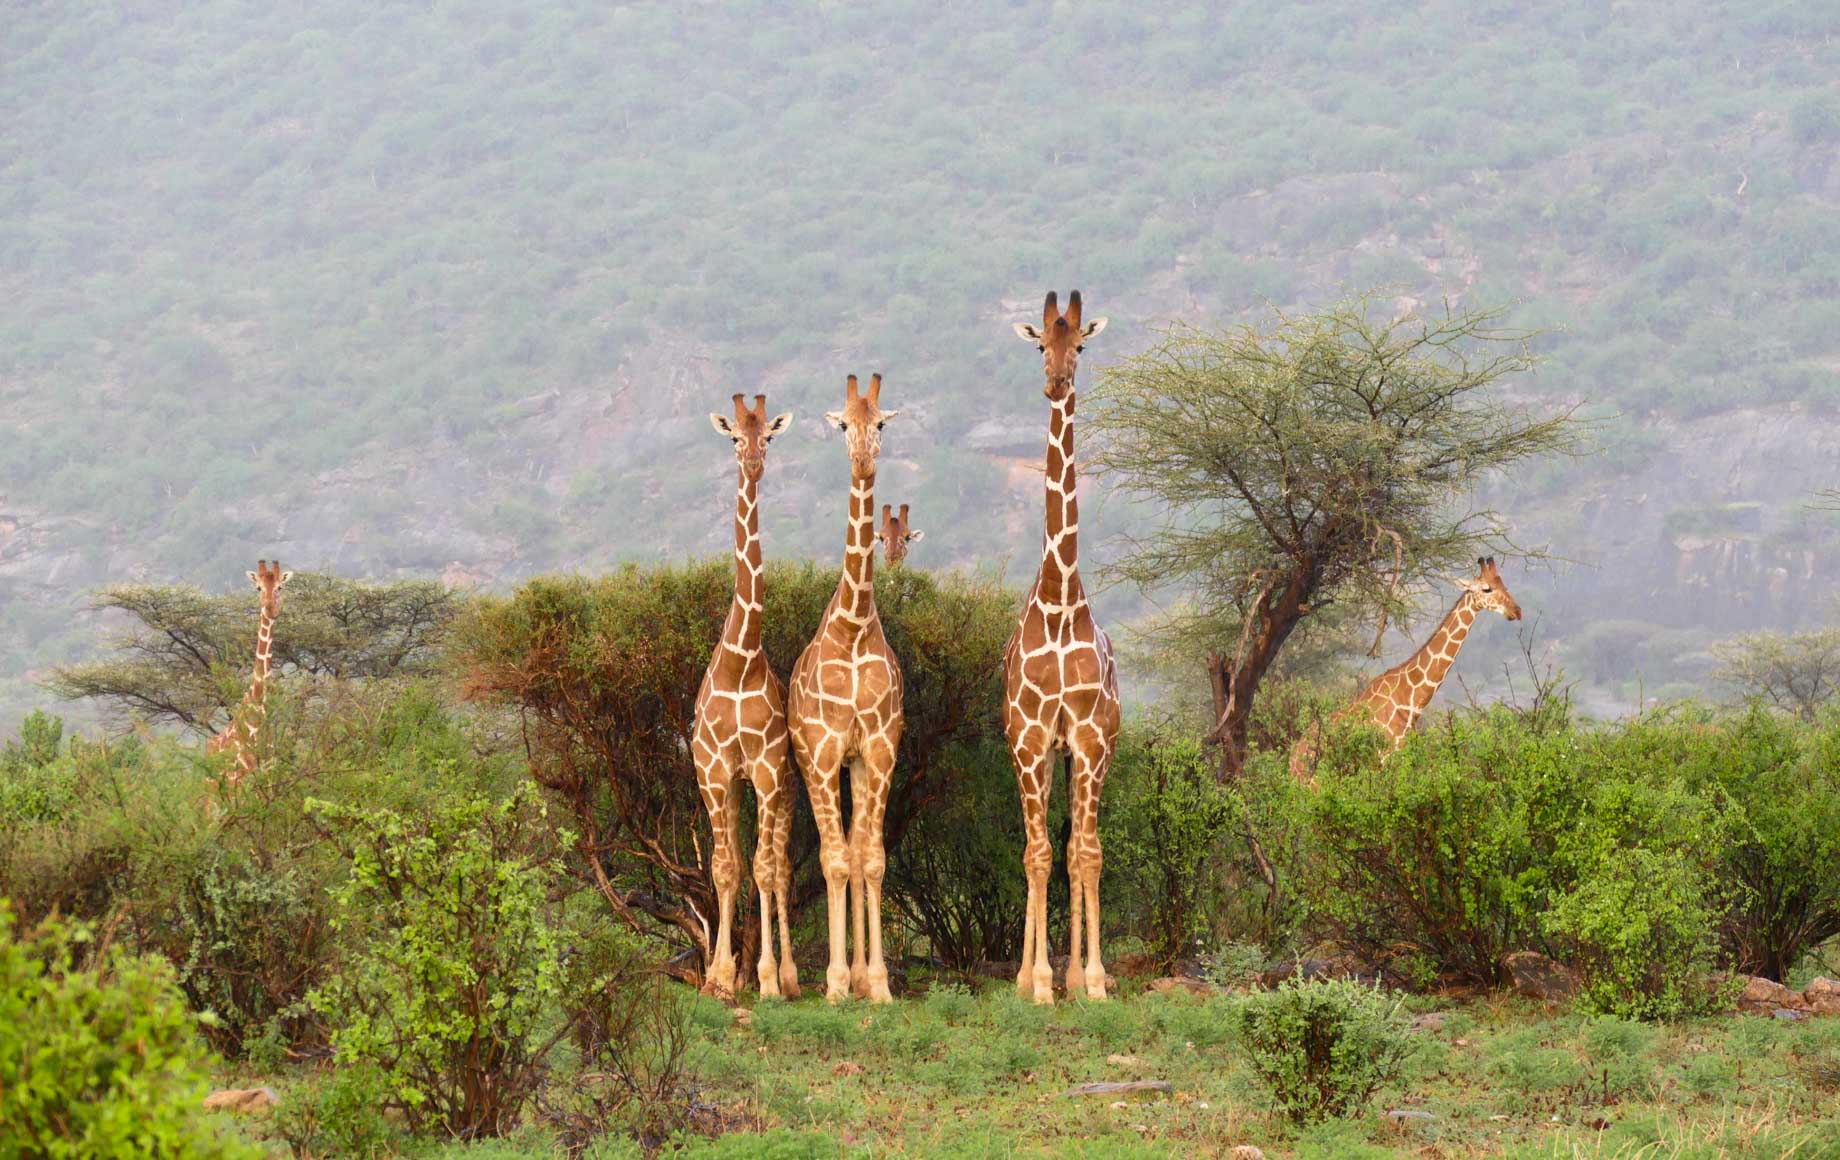 Giraffes at Samburu National Reserve Park